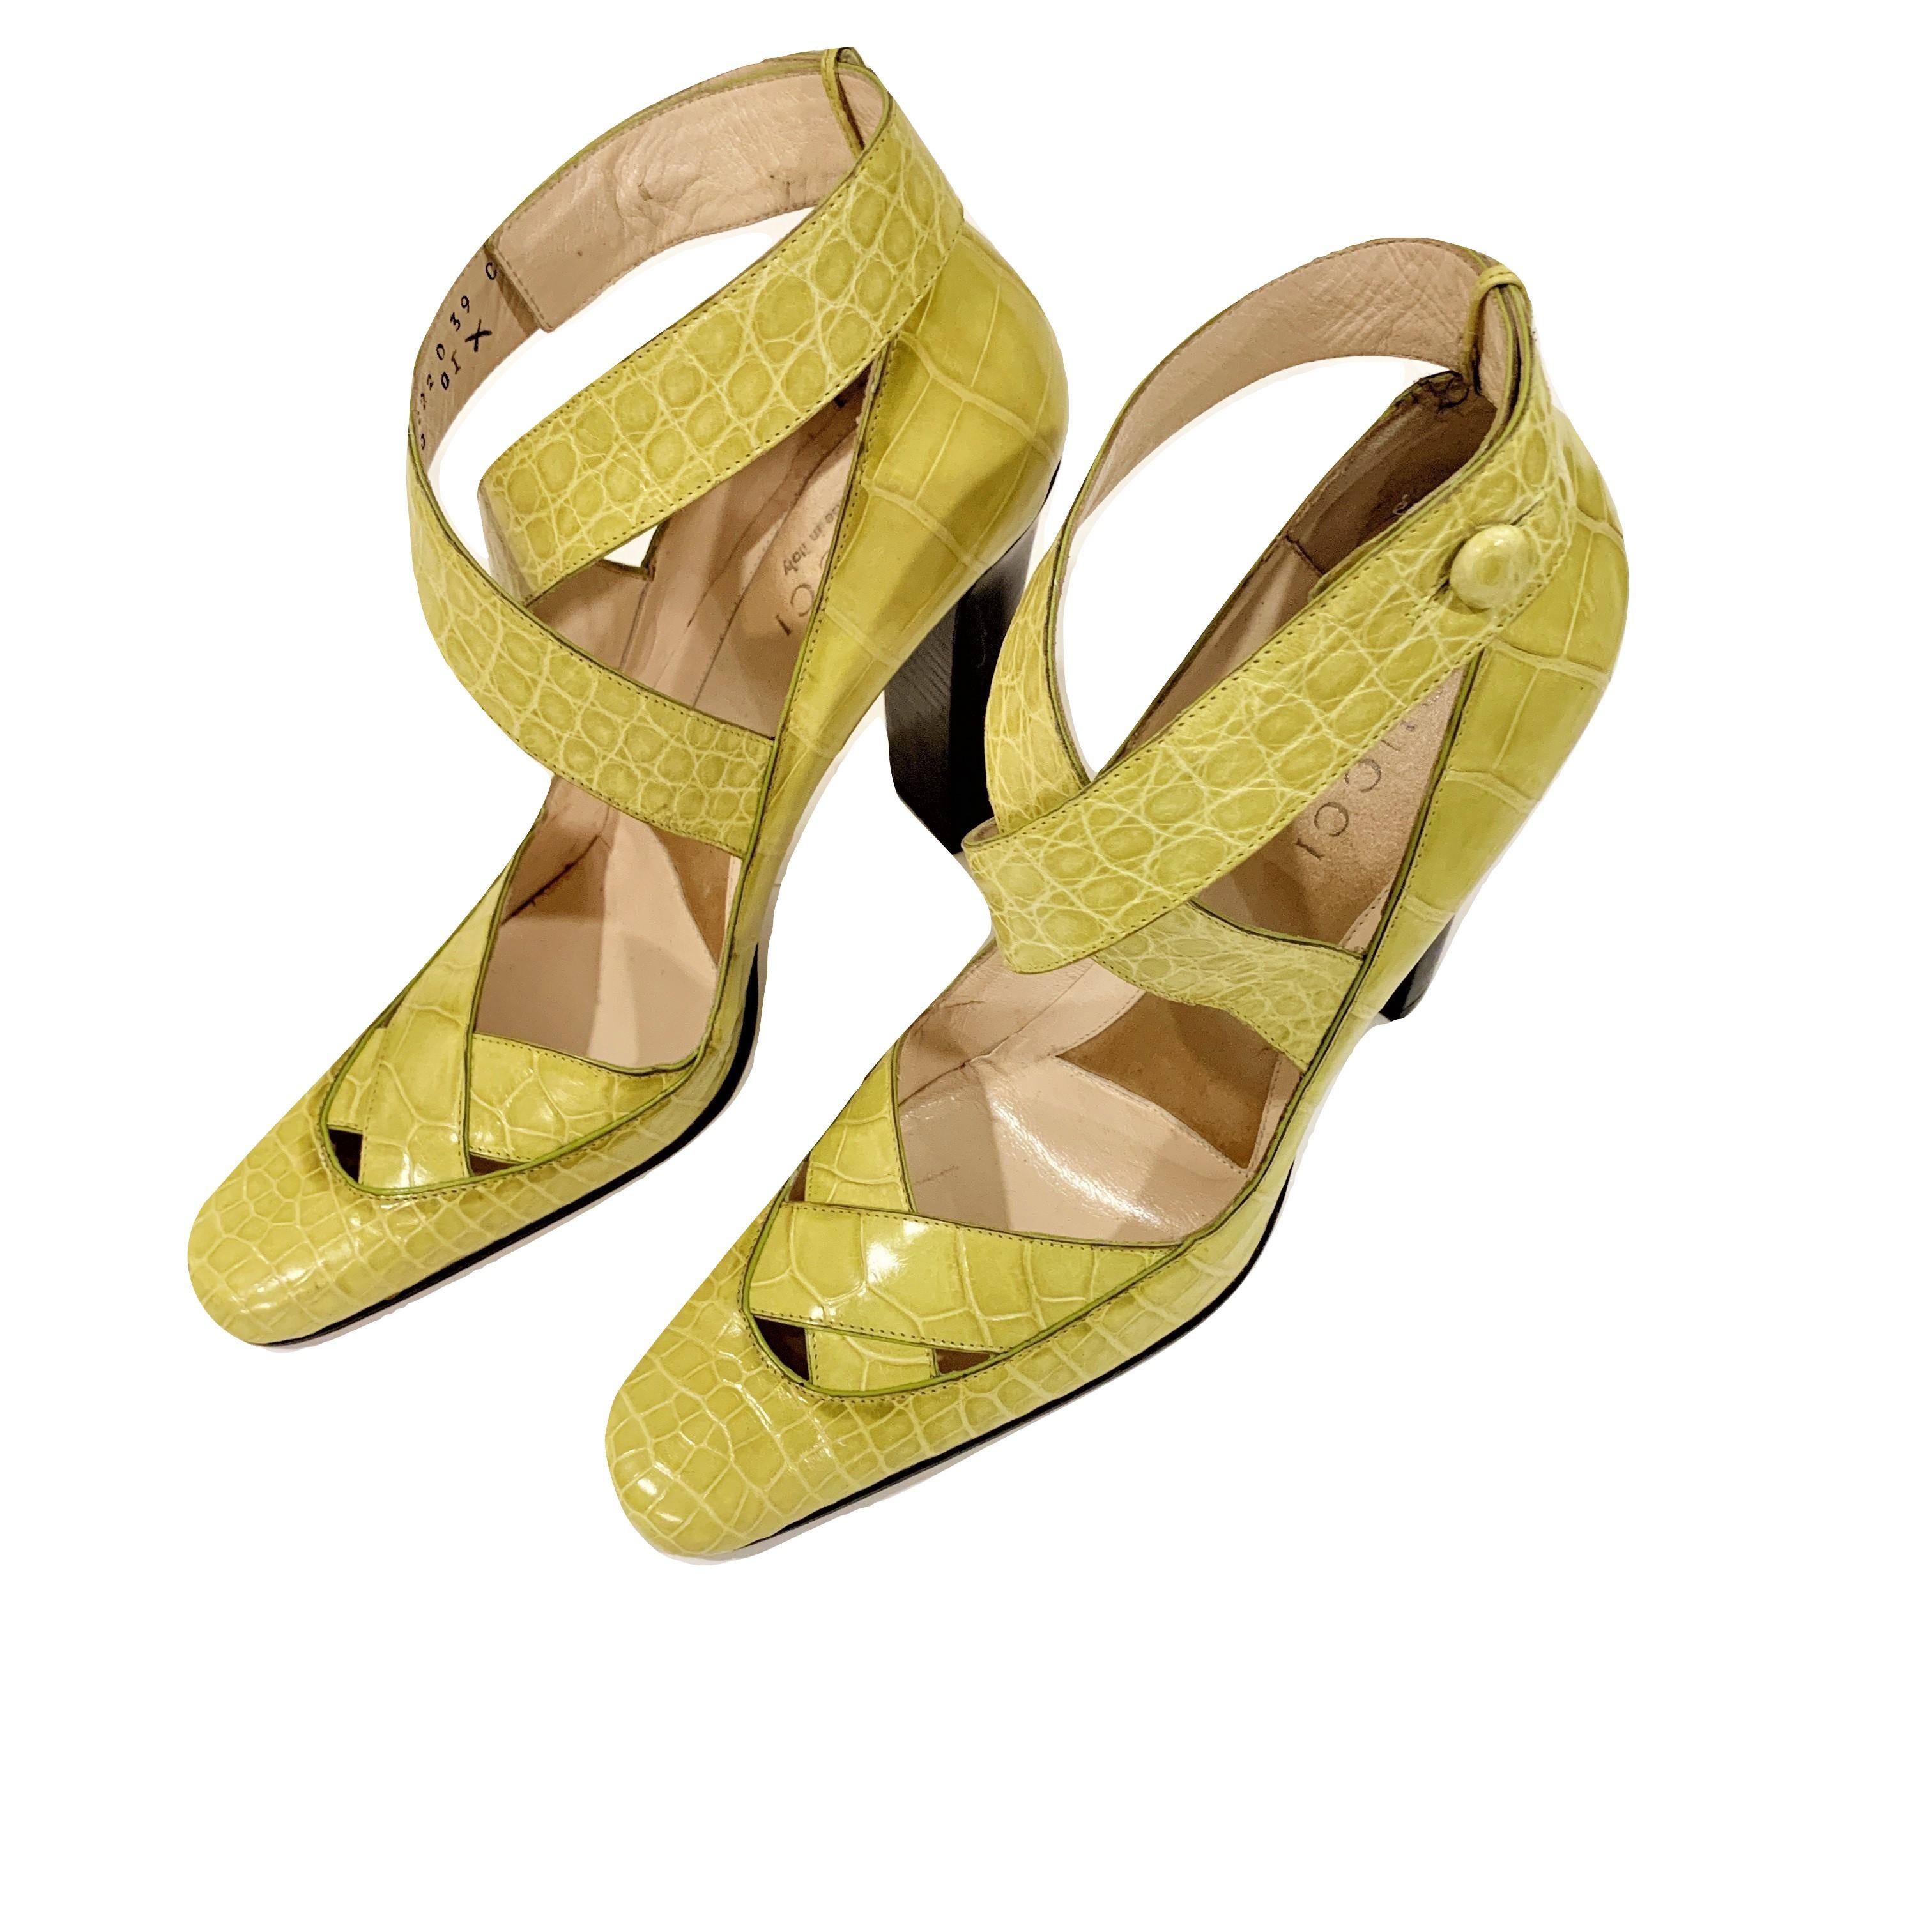 Neu Tom Ford for Gucci Krokodil Ballerina Heels Pumps in Light Chartreuse Sz 39 8